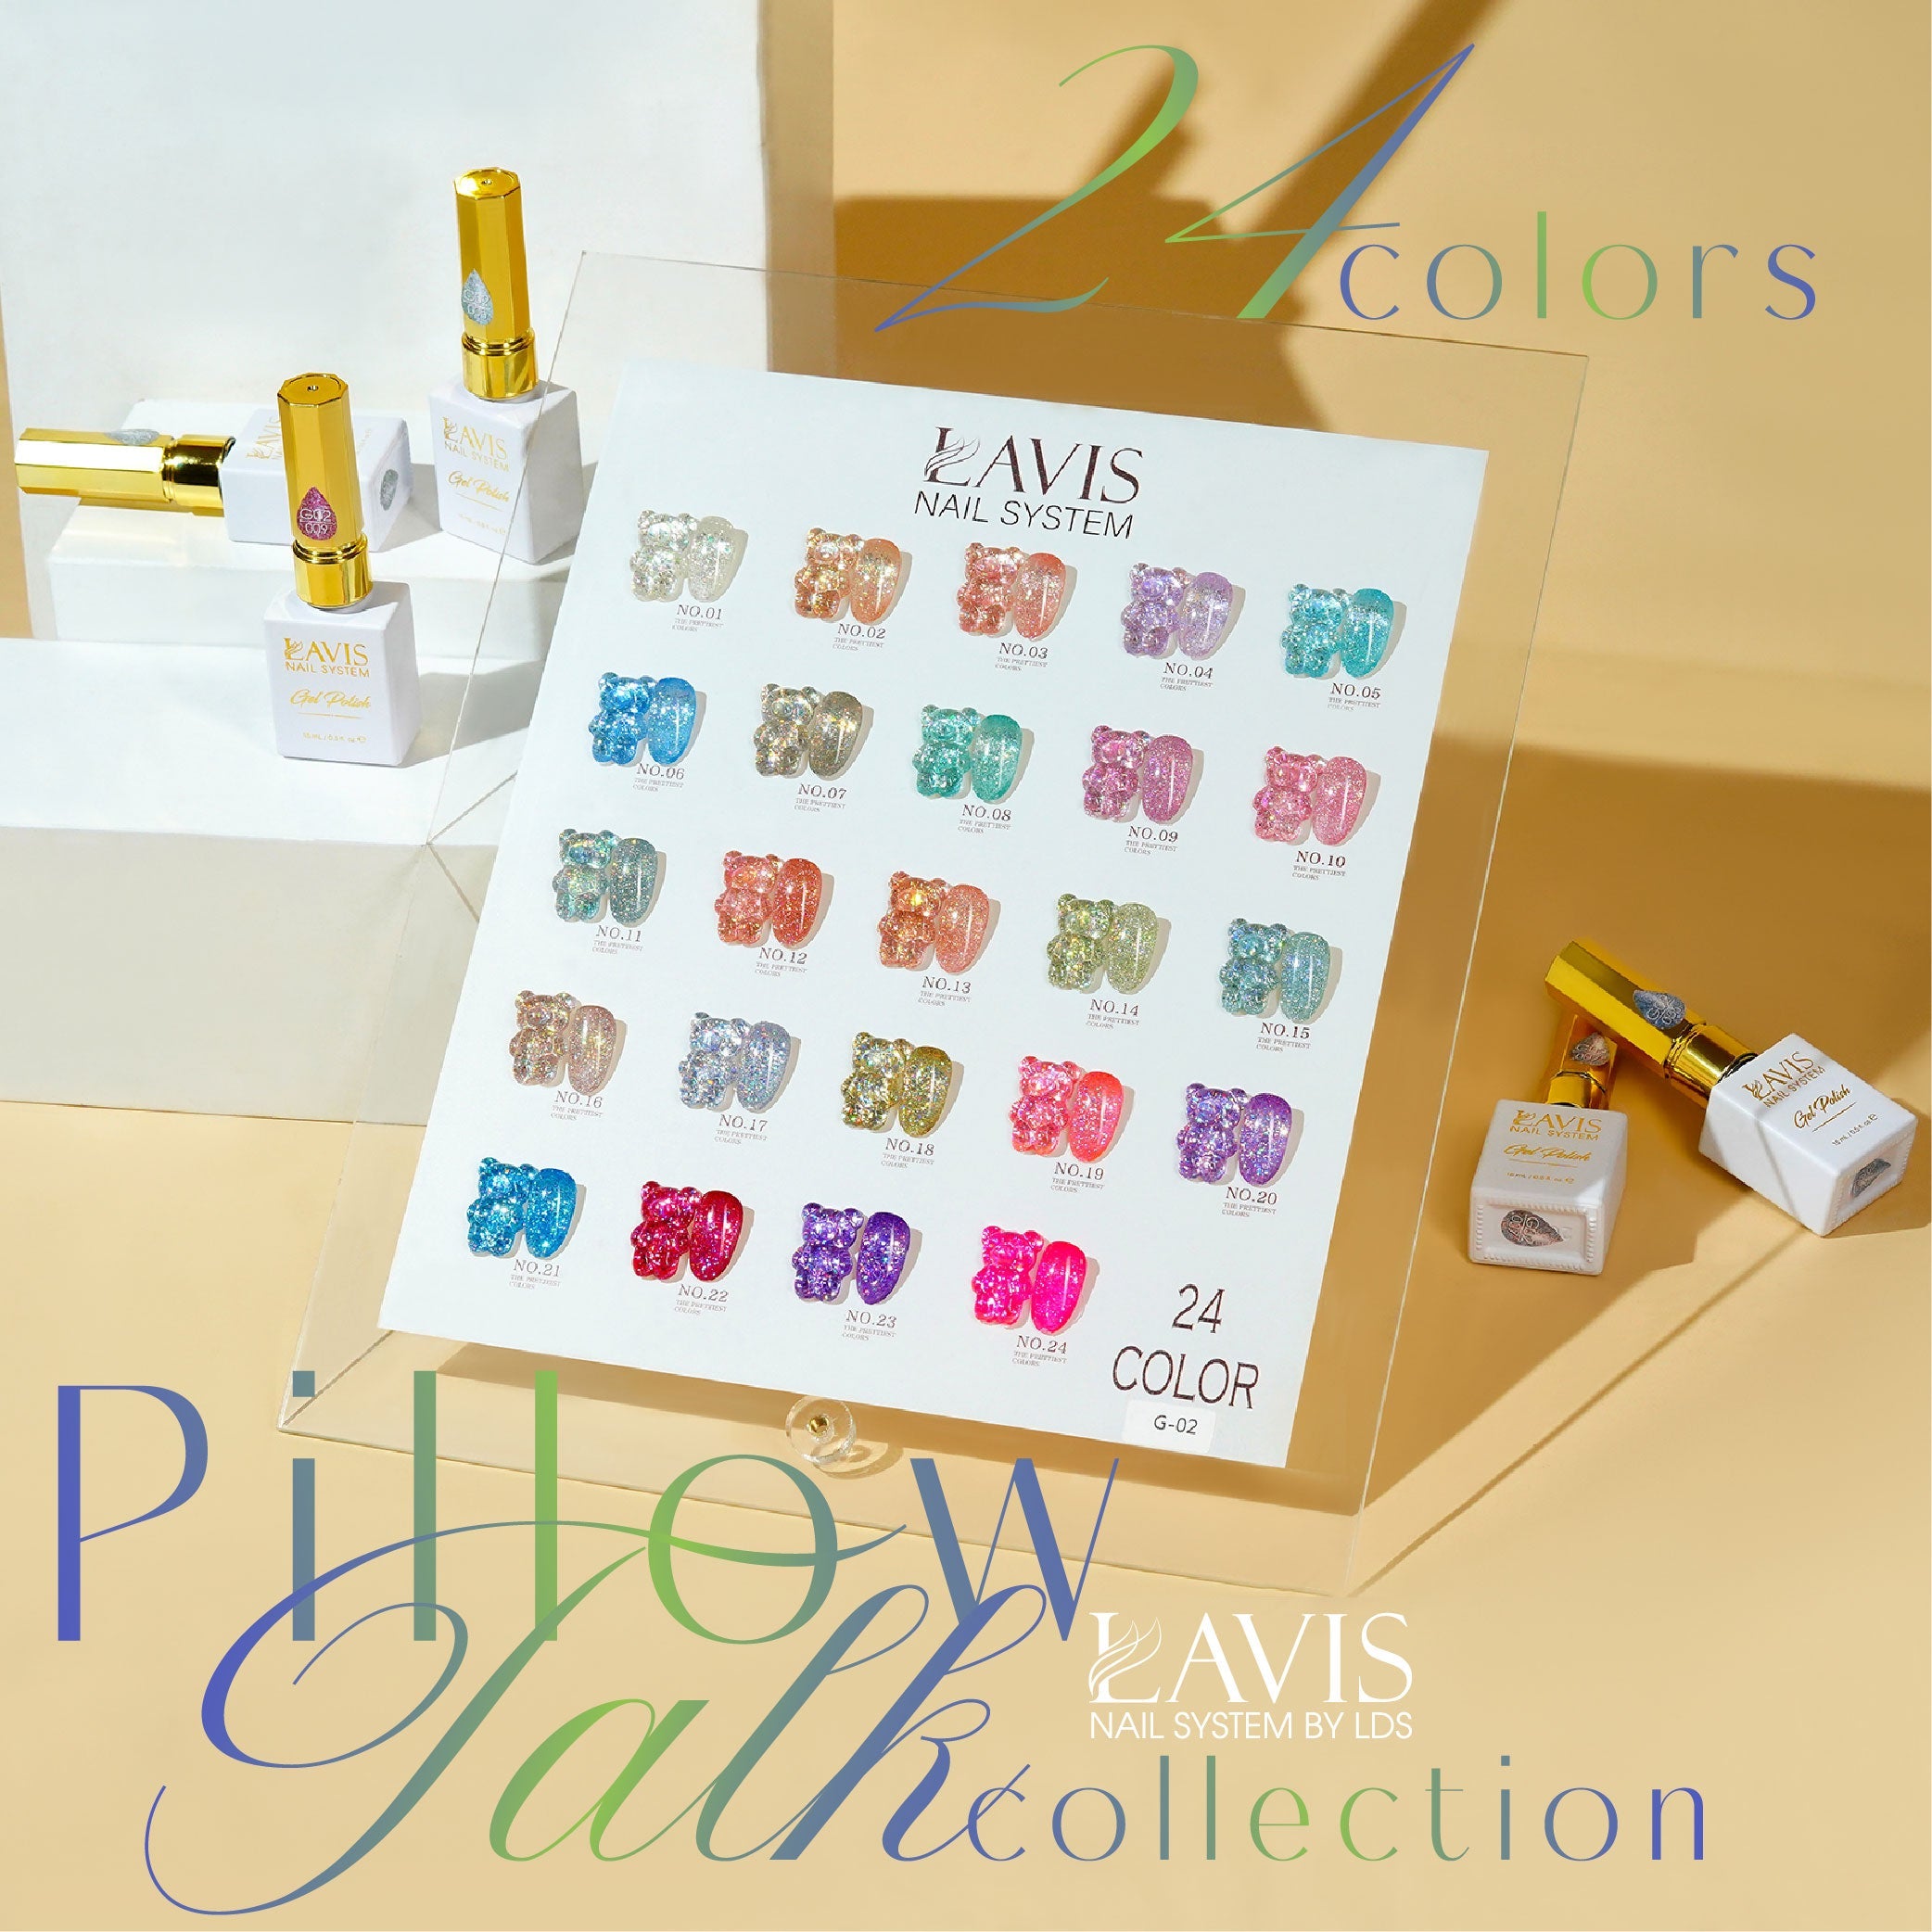 LAVIS Glitter G02 - 16 - Gel Polish 0.5 oz - Pillow Talk Collection